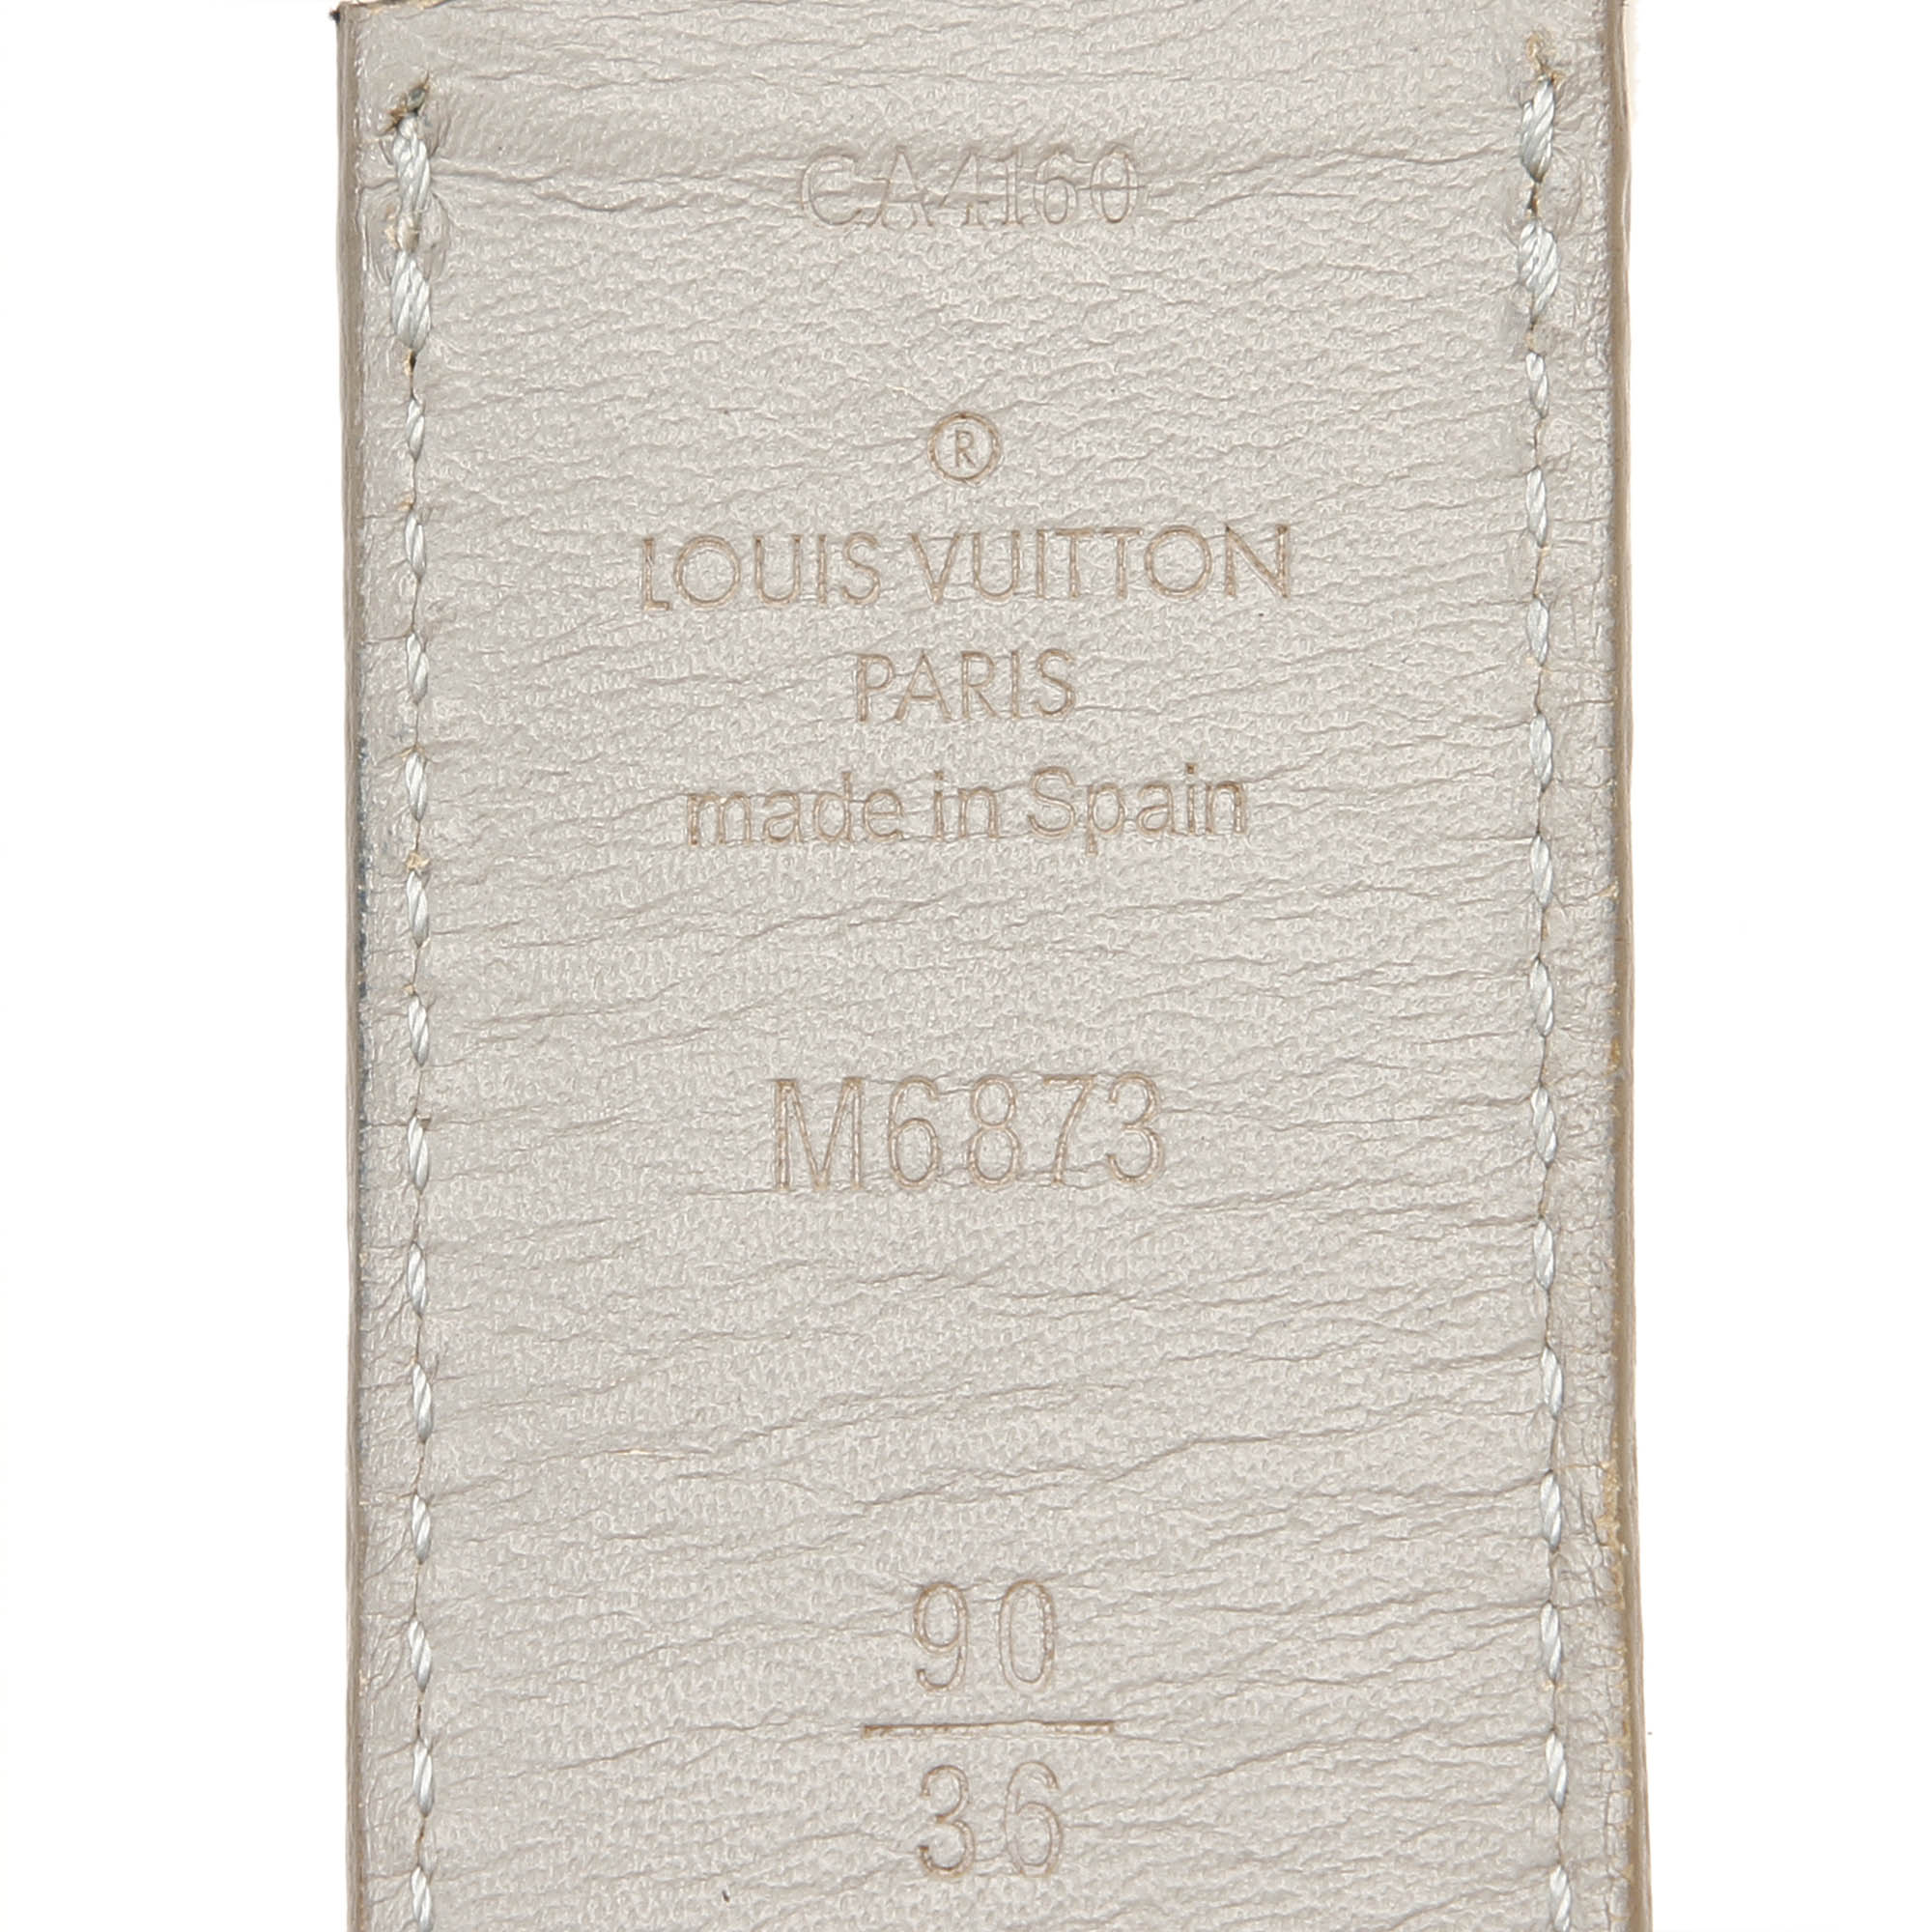 Pre-Loved Louis Vuitton White Calf Leather Damier Infini Belt Spain | eBay